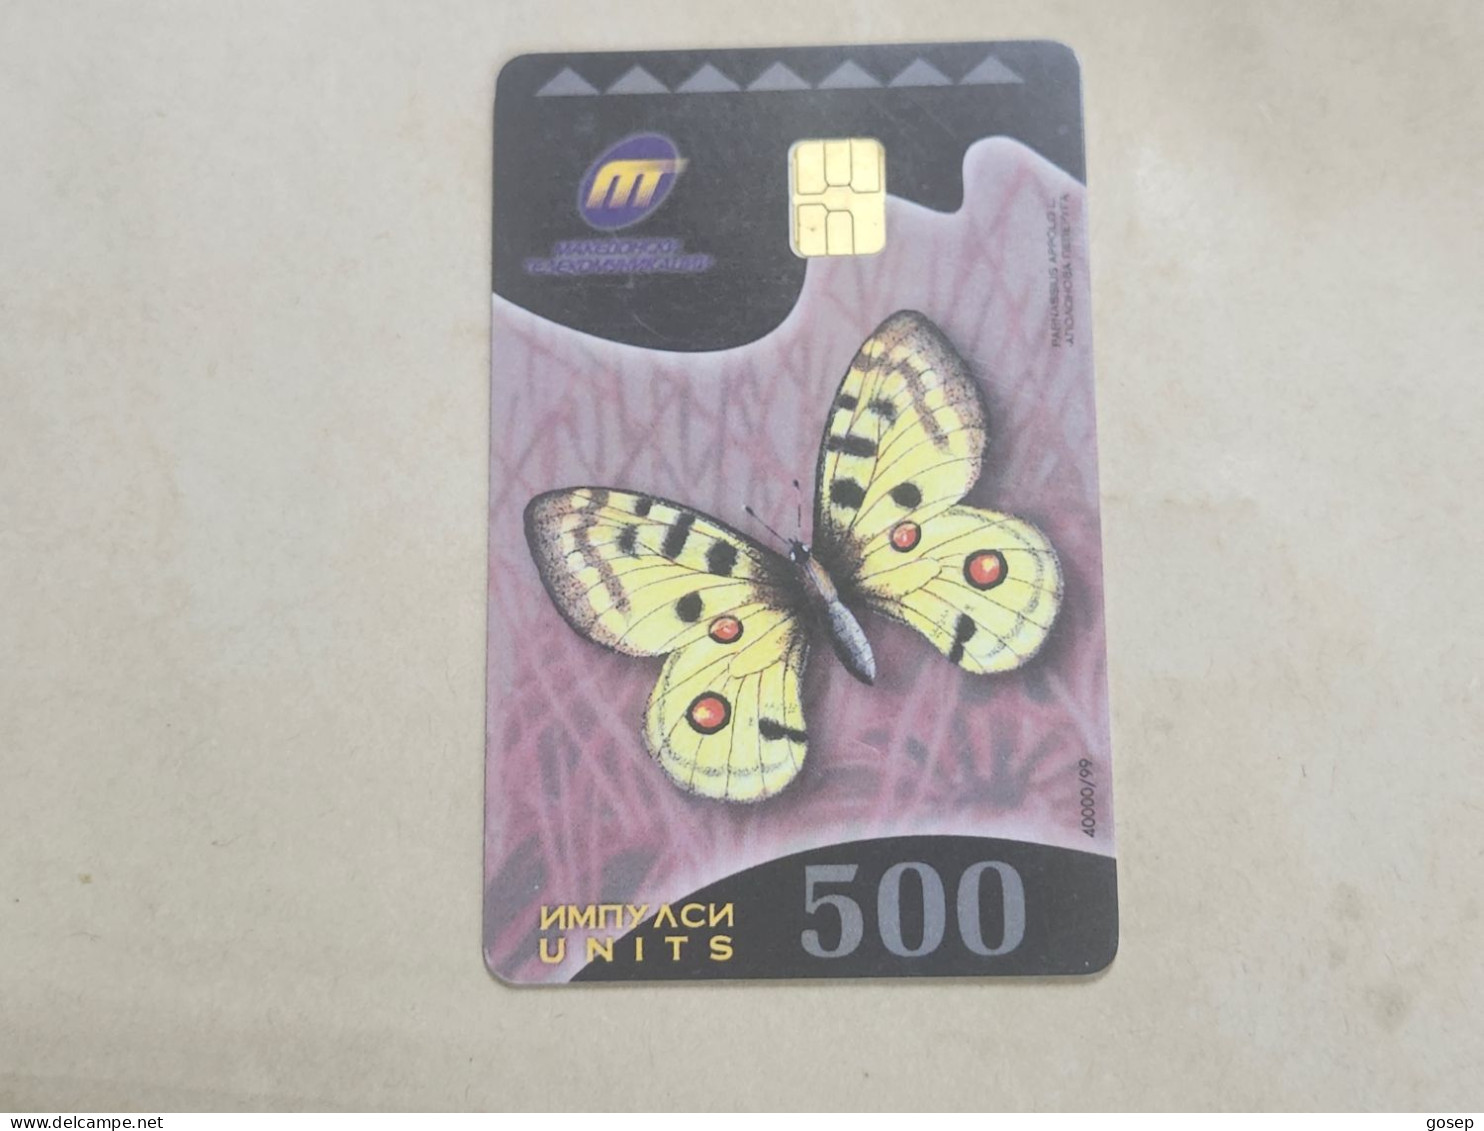 Macedonia-(MK-MAT-0009C)-Butterfly Instructions-(12)-(12/98)-(500units)-(000749104)-tirage-40.000+1card Prepiad Free - Macedonia Del Nord